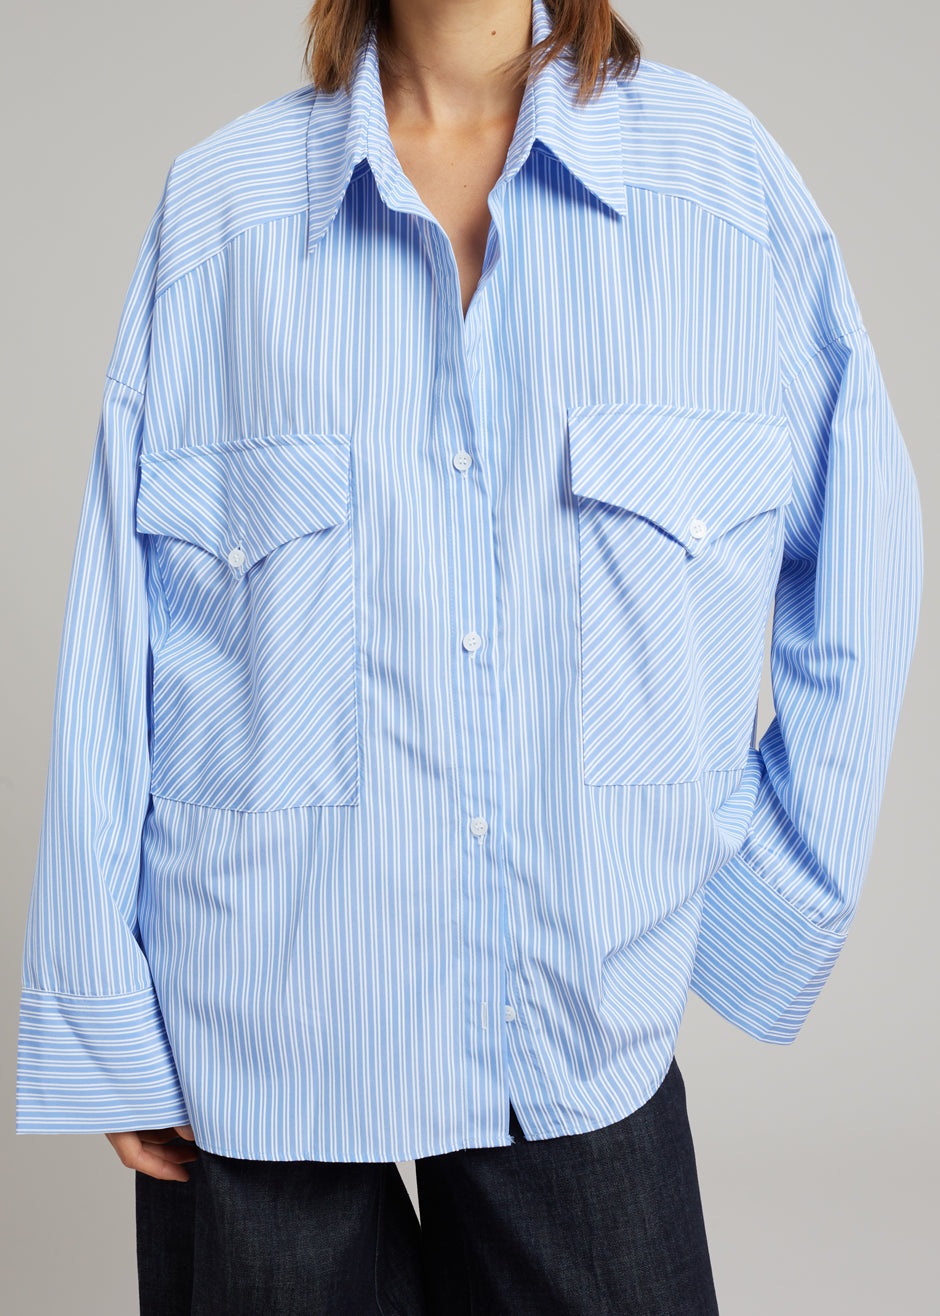 Orson Pocket Shirt - Blue Stripe - 7